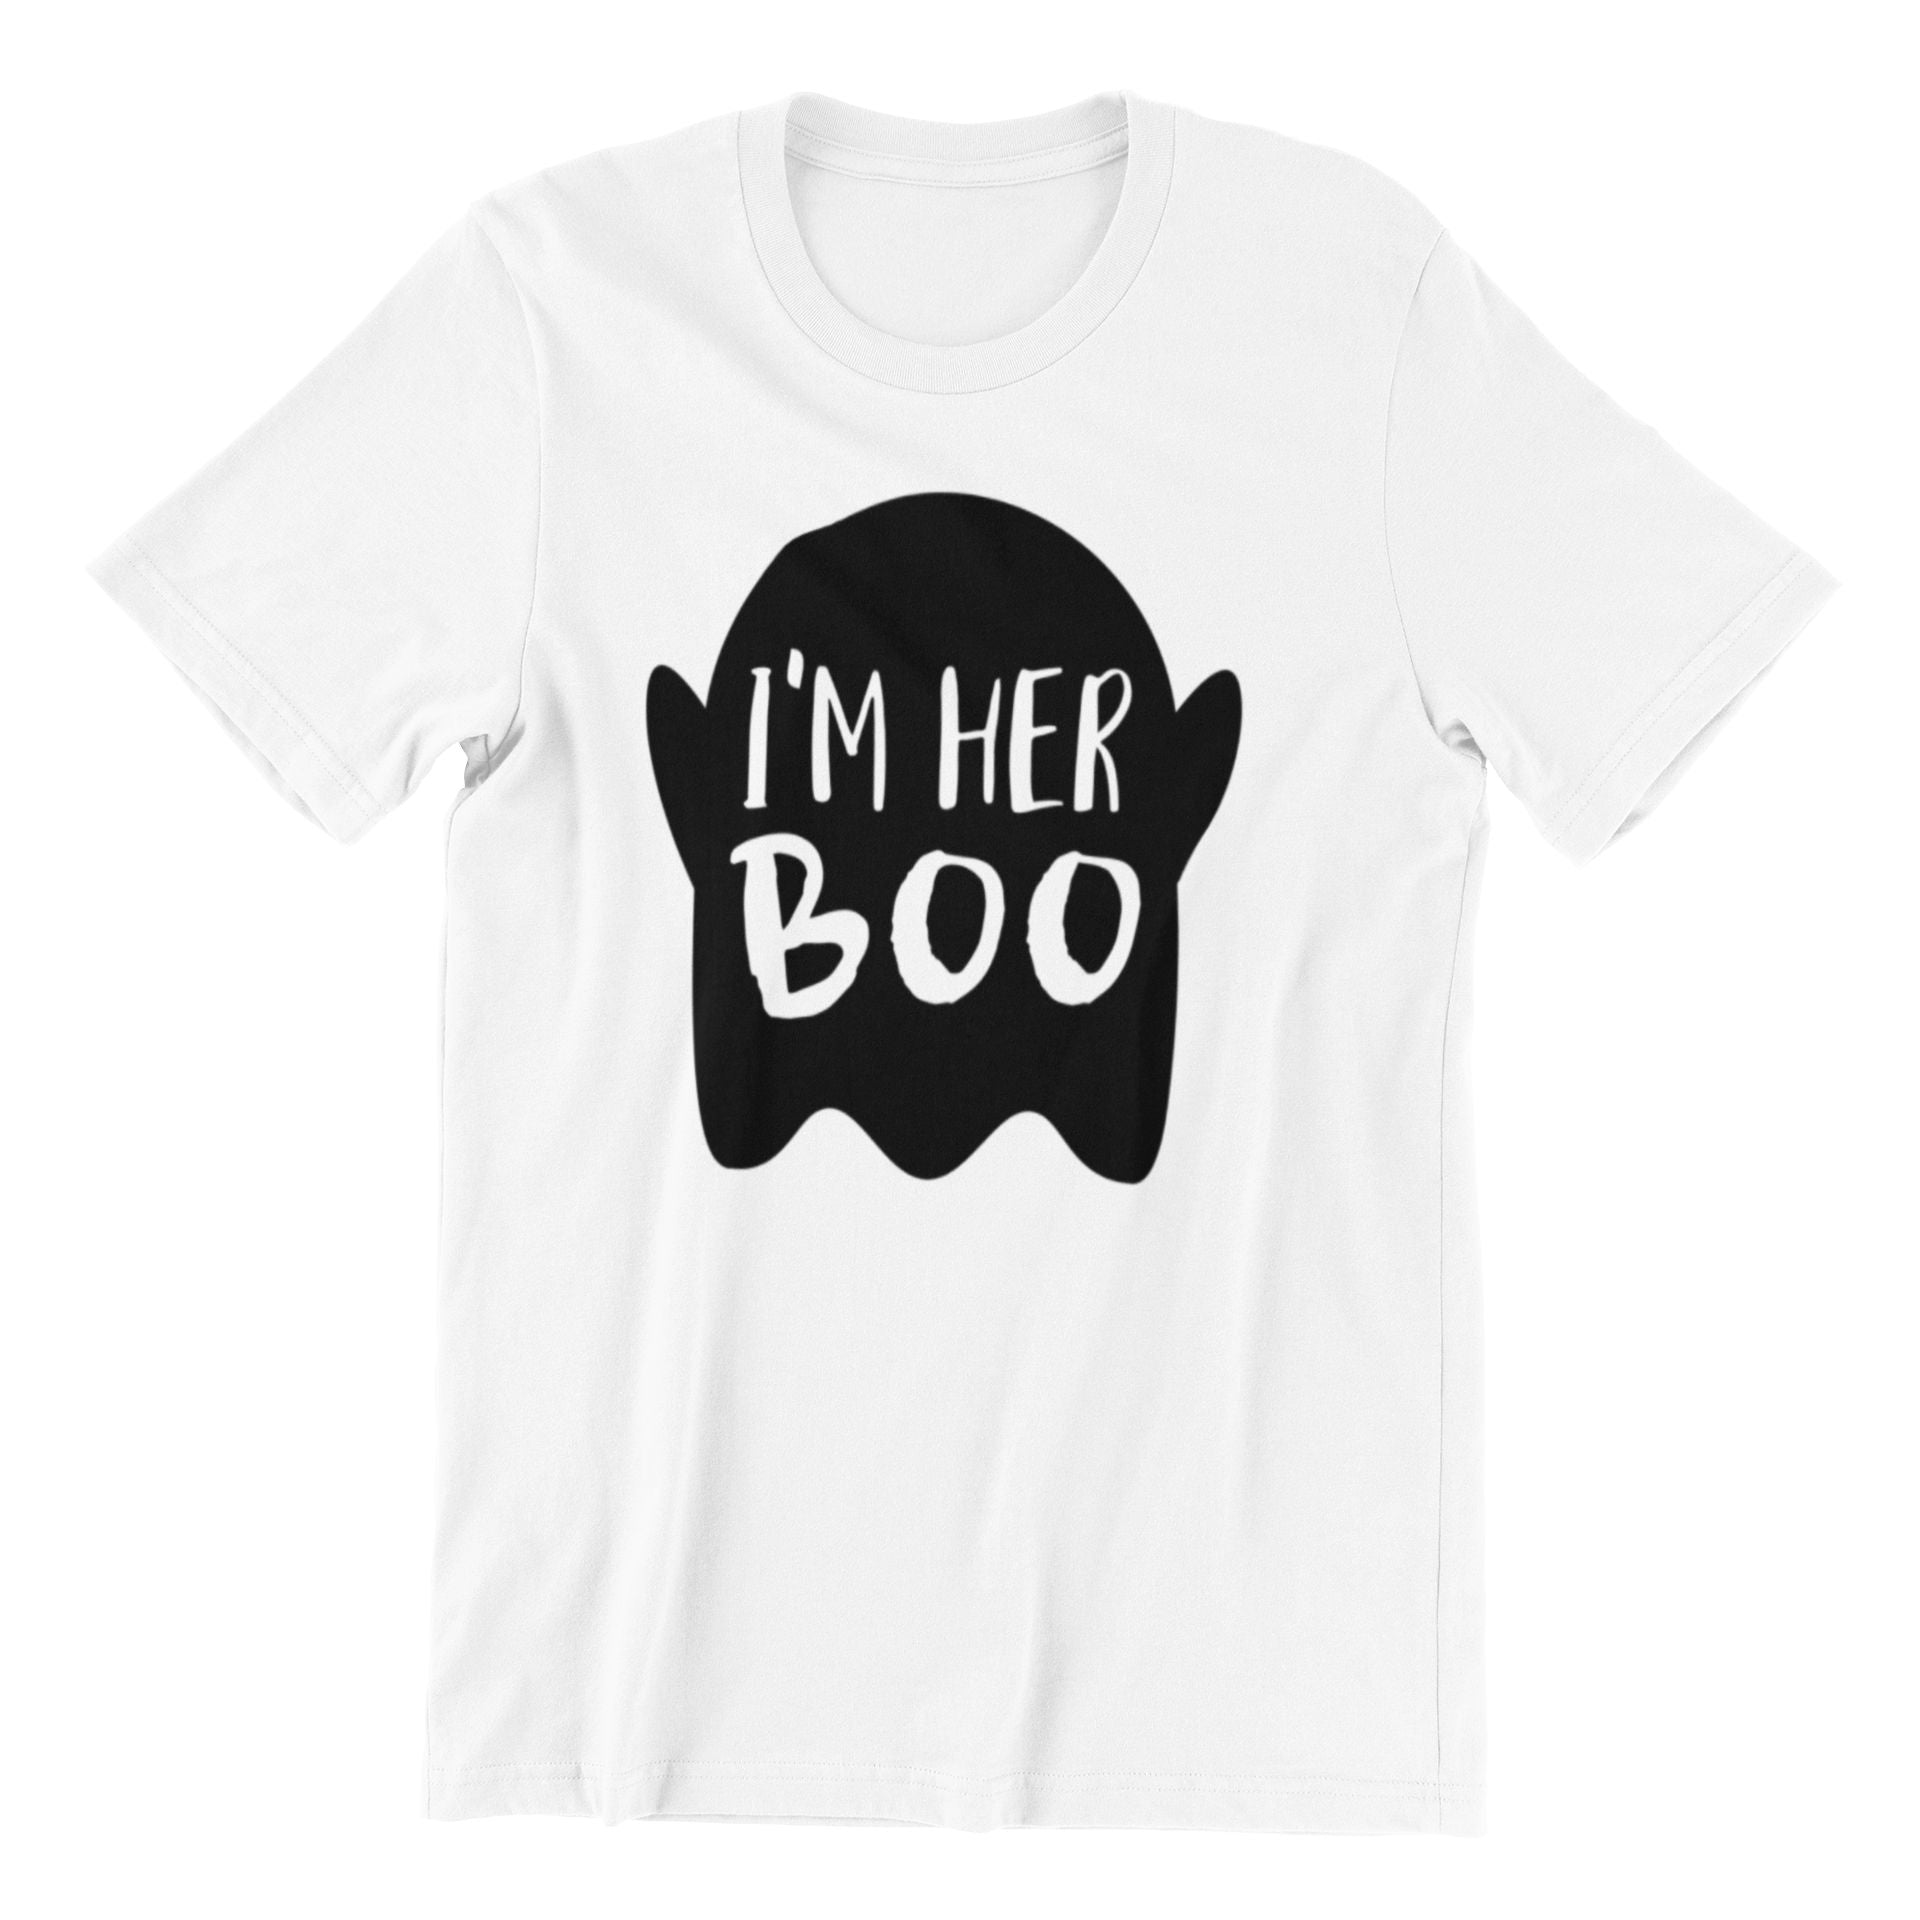 I'm Her Boo Shirt